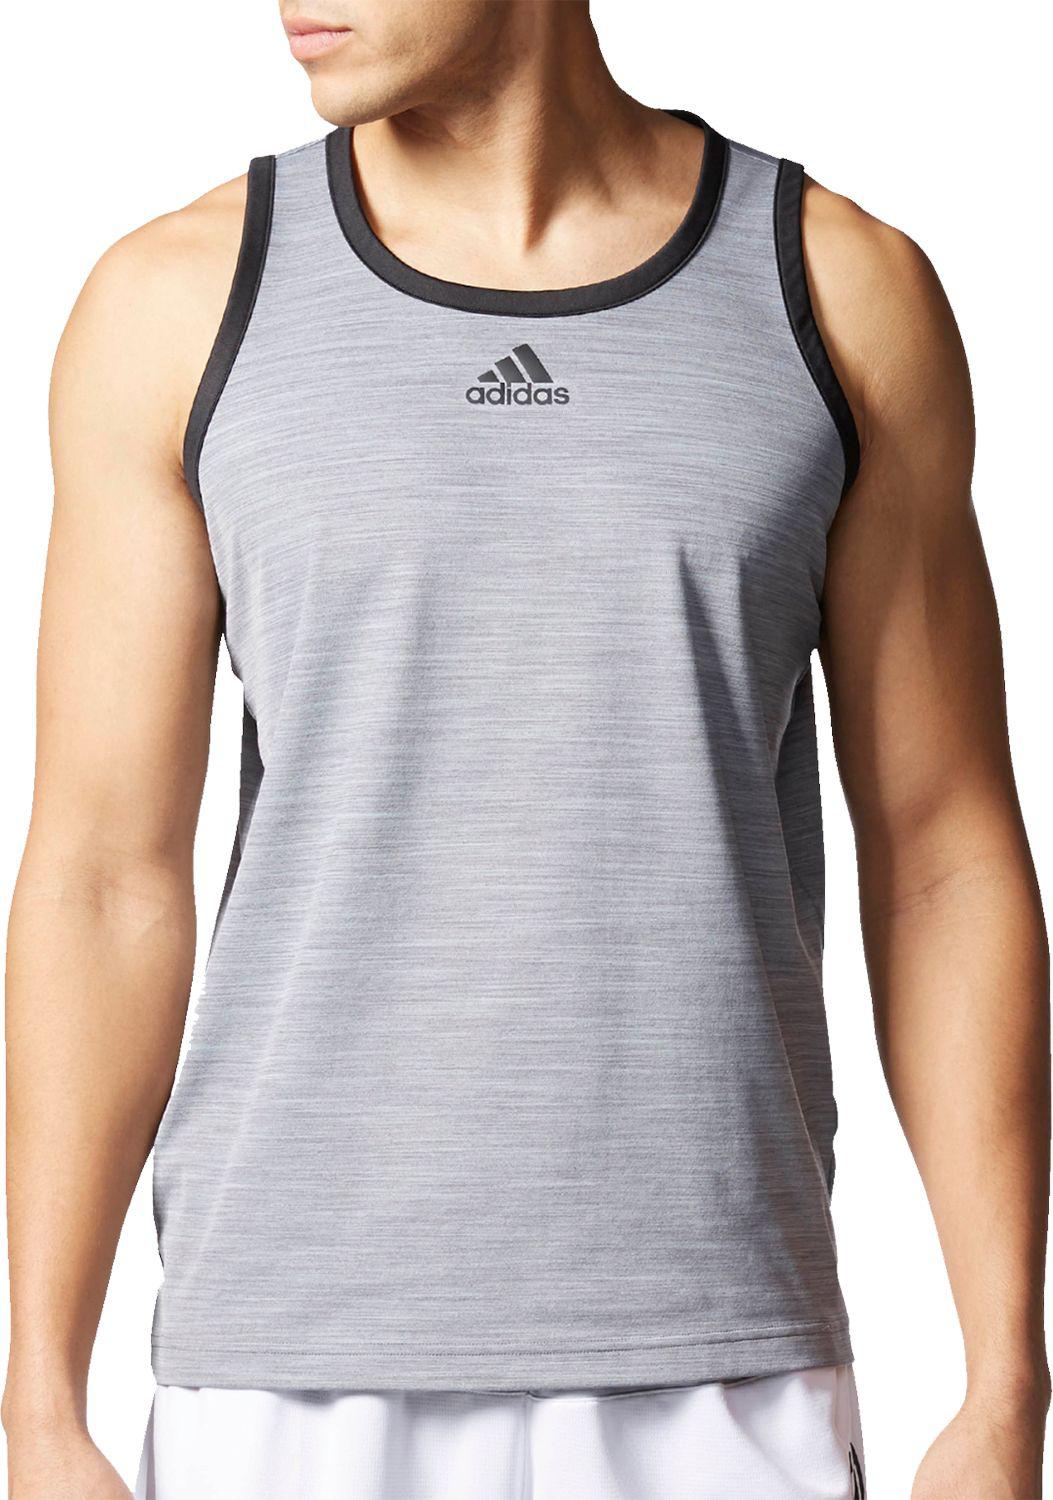 Lyst - Adidas Heathered Basketball Sleeveless Shirt in Gray for Men